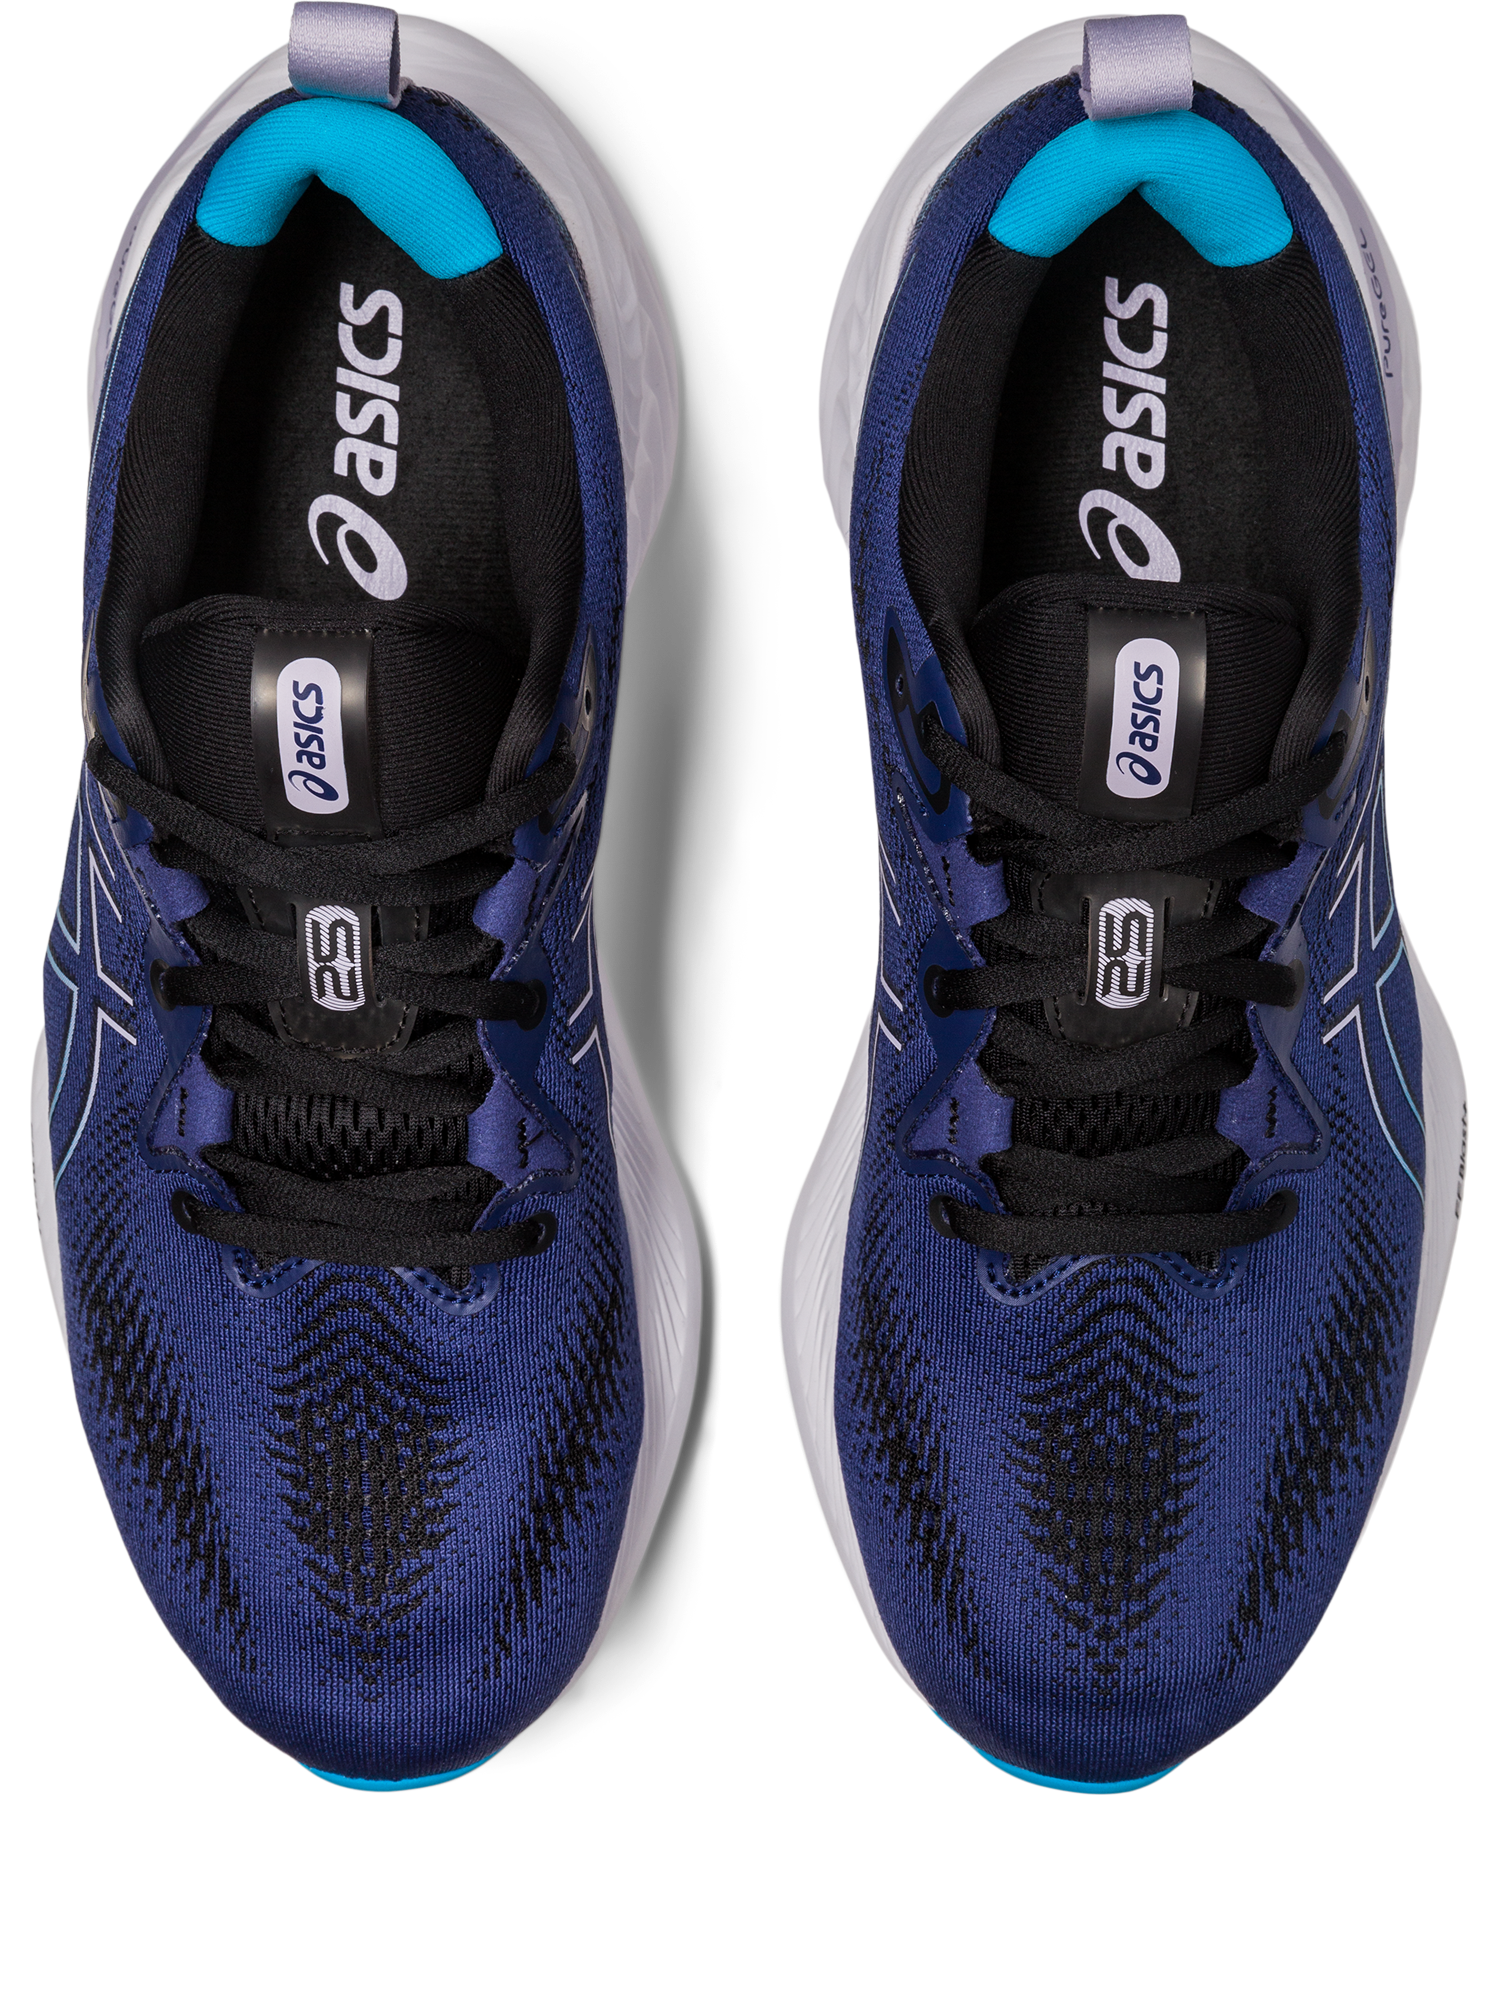 Asics Men's Gel Cumulus 25 Running Shoes in Indigo Blue/Island Blue